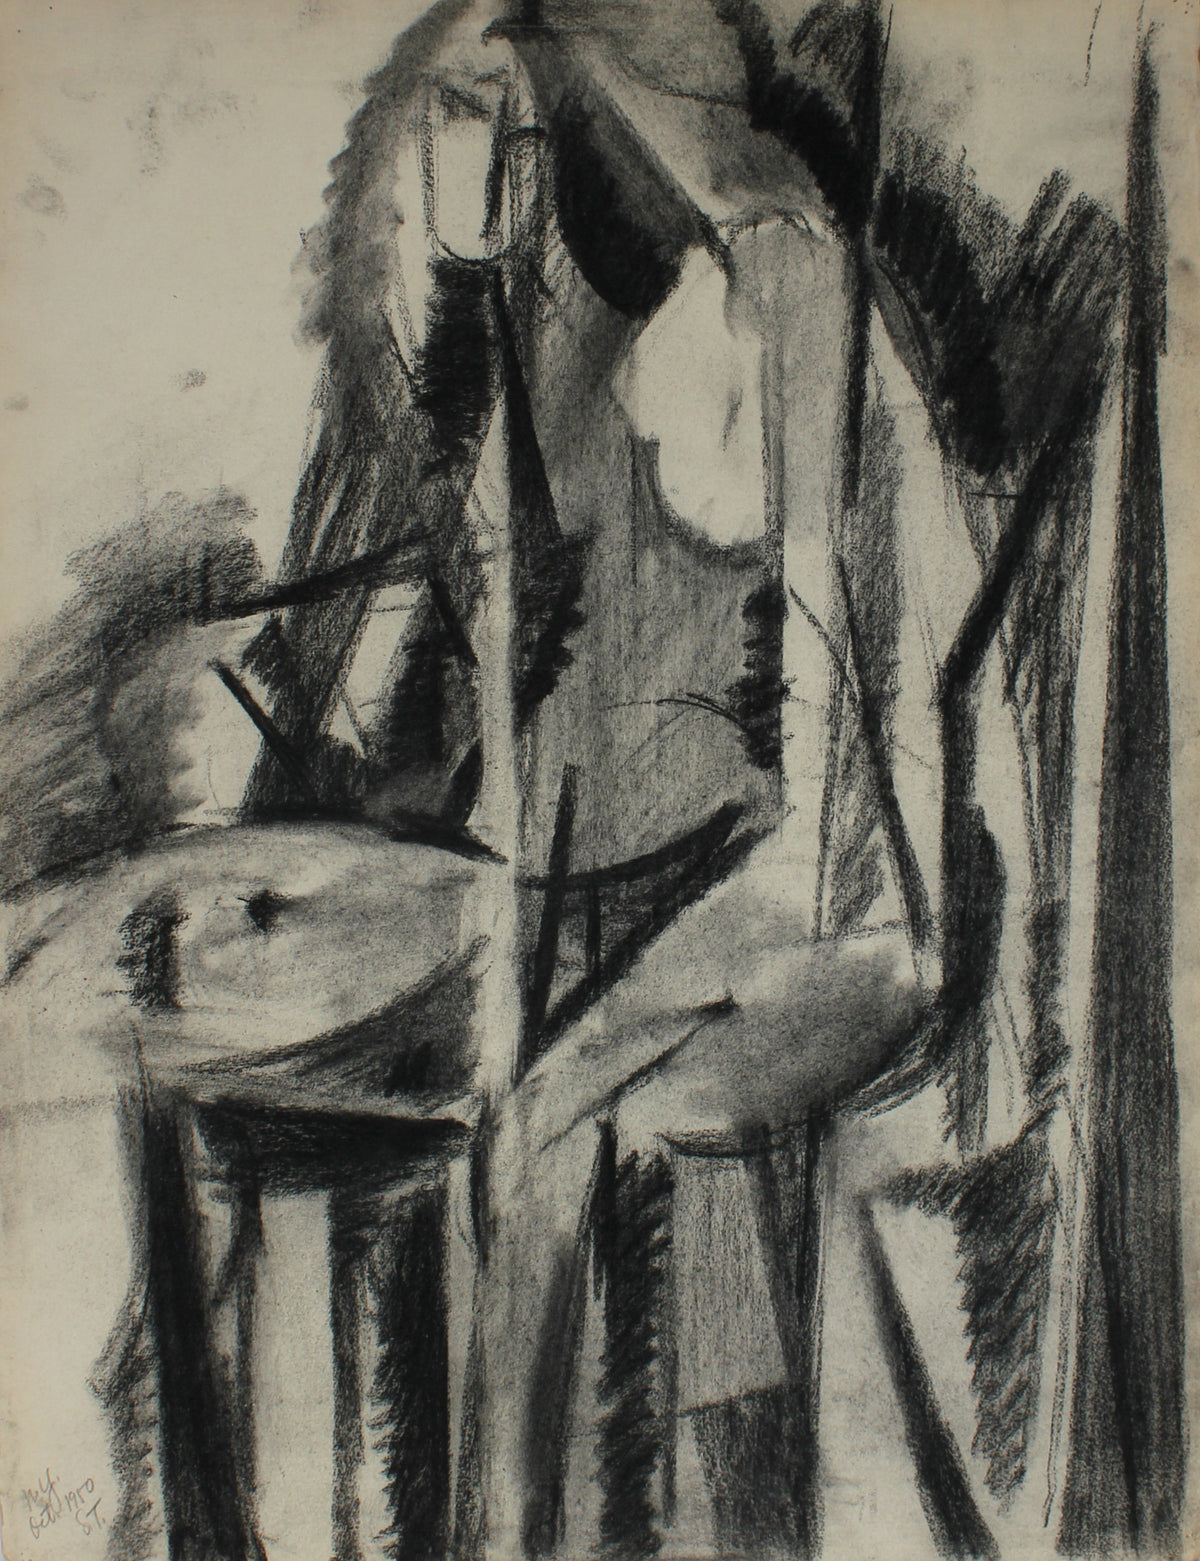 Abstracted Linear Figure&lt;br&gt;October 1950 Charcoal on Paper&lt;br&gt;&lt;br&gt;#66830